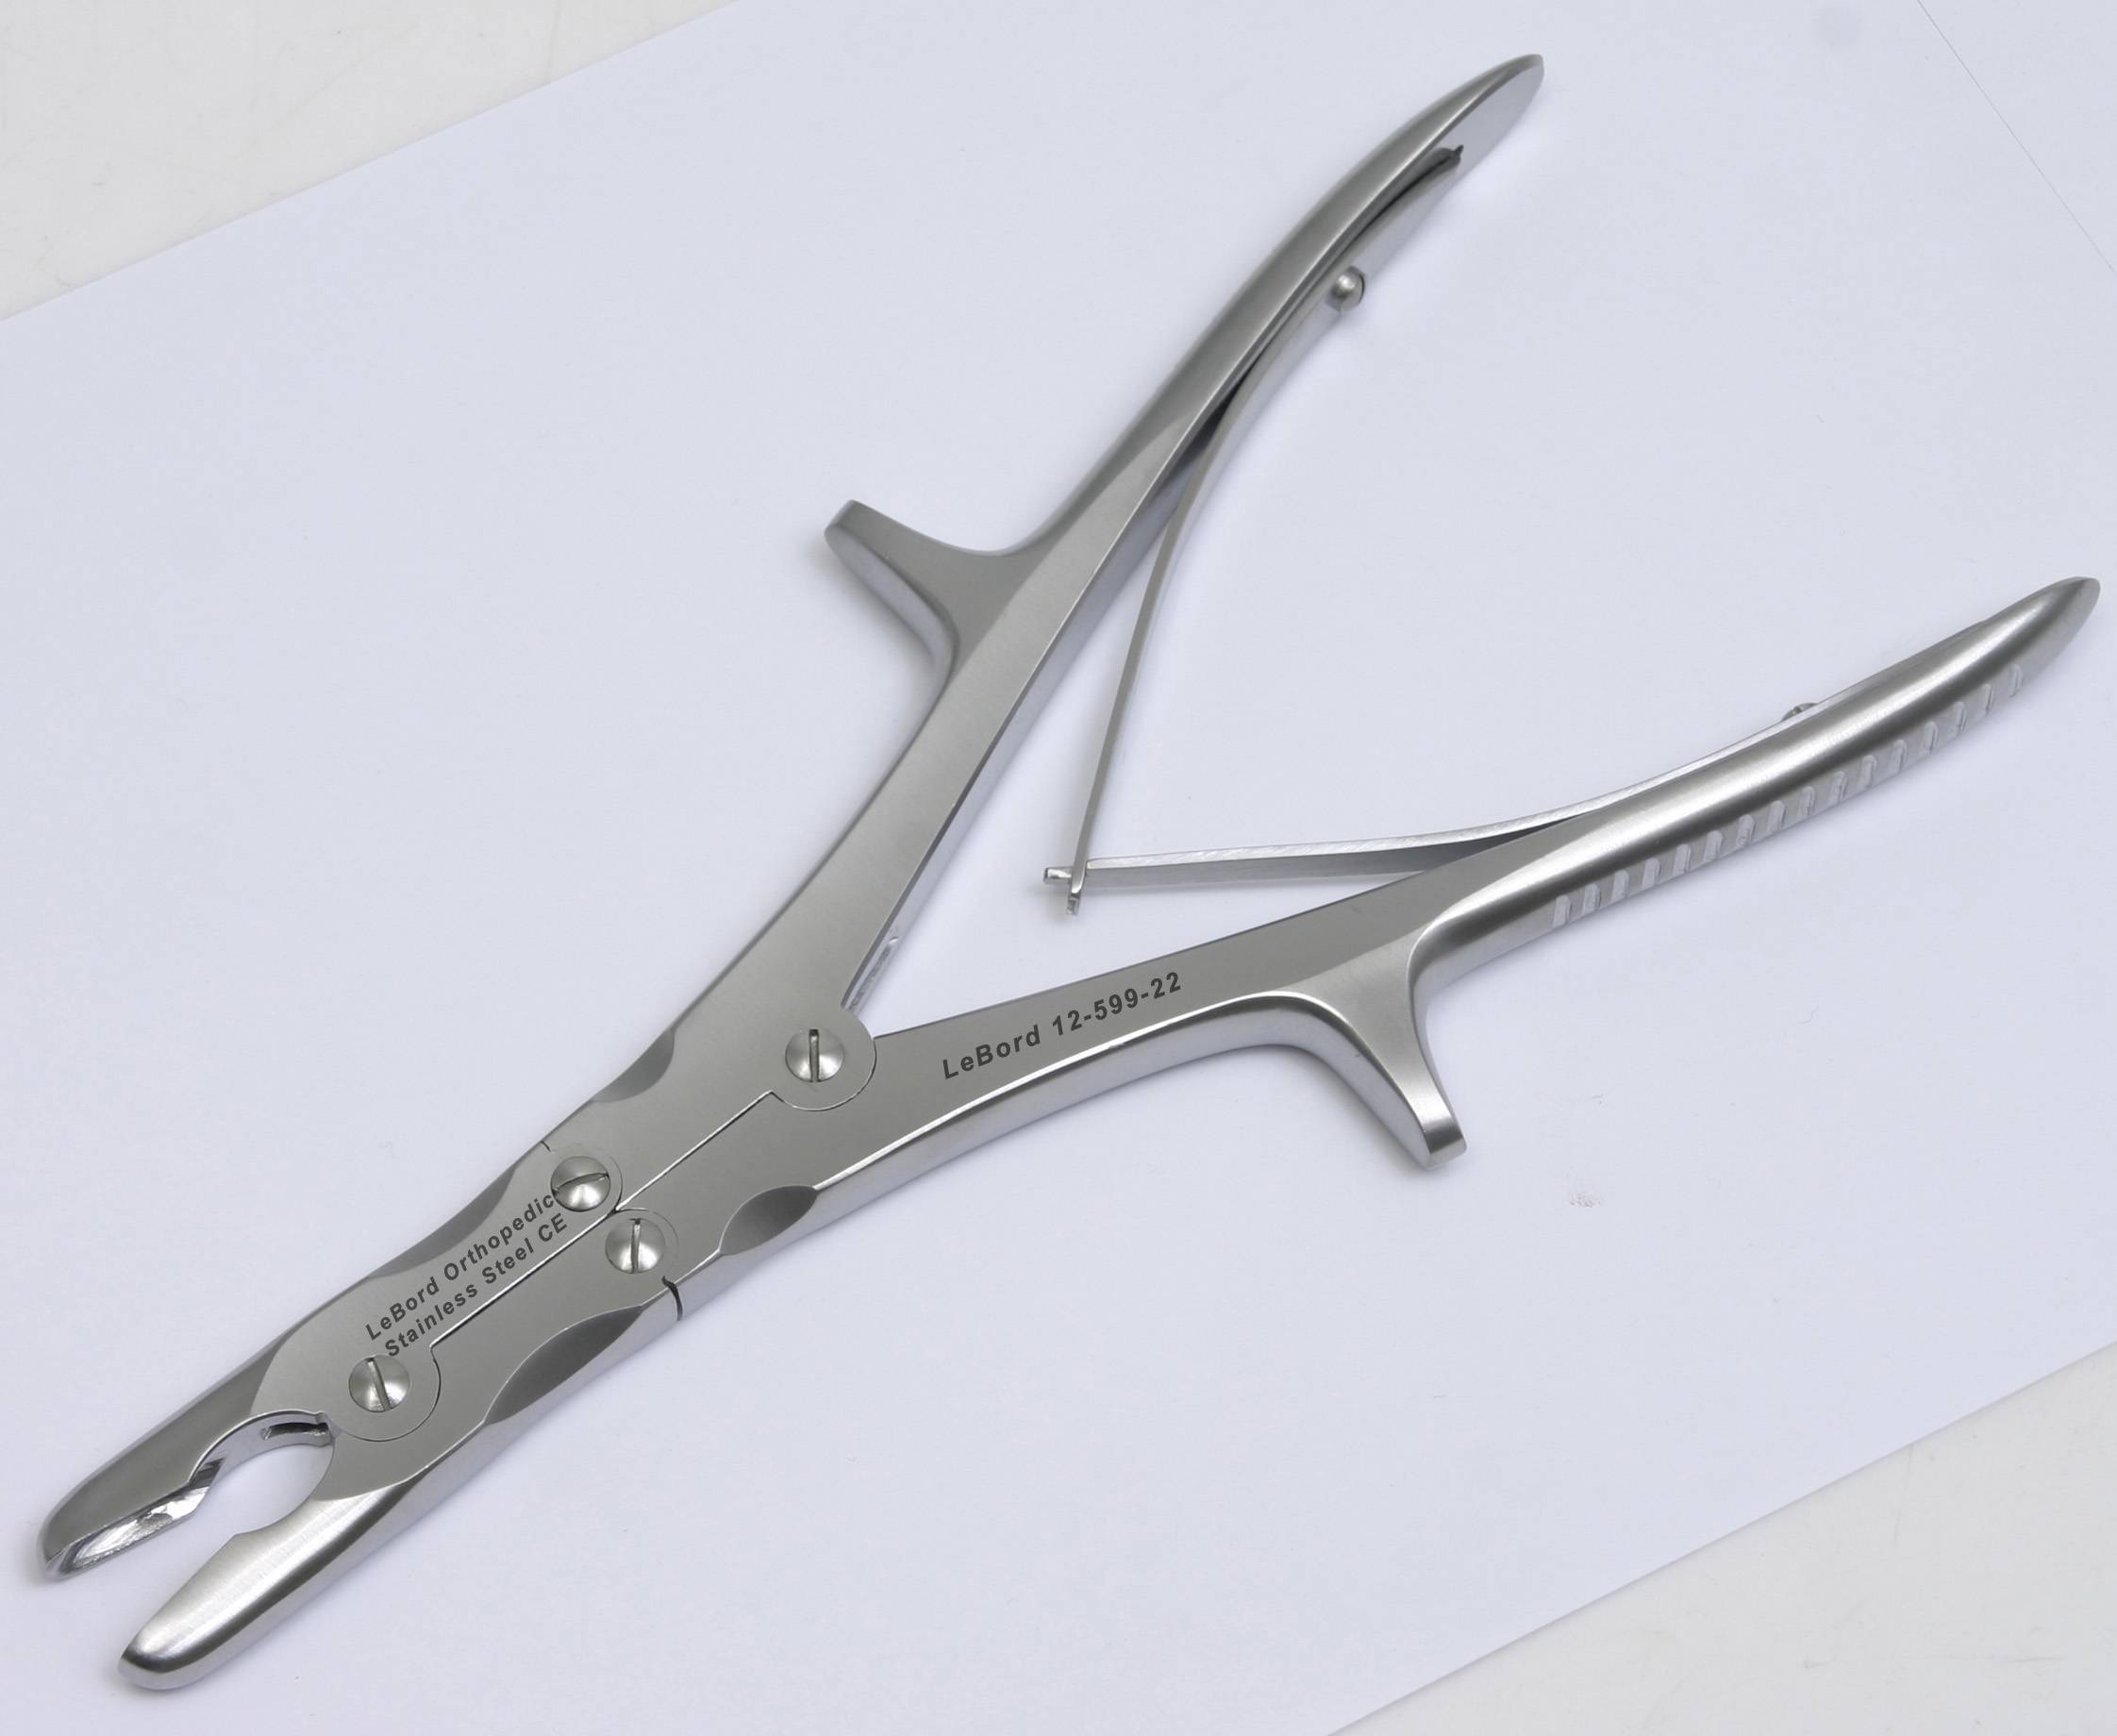 Surgical Orthopedic Bone Nibbler - LeBord (Surgical Instruments)